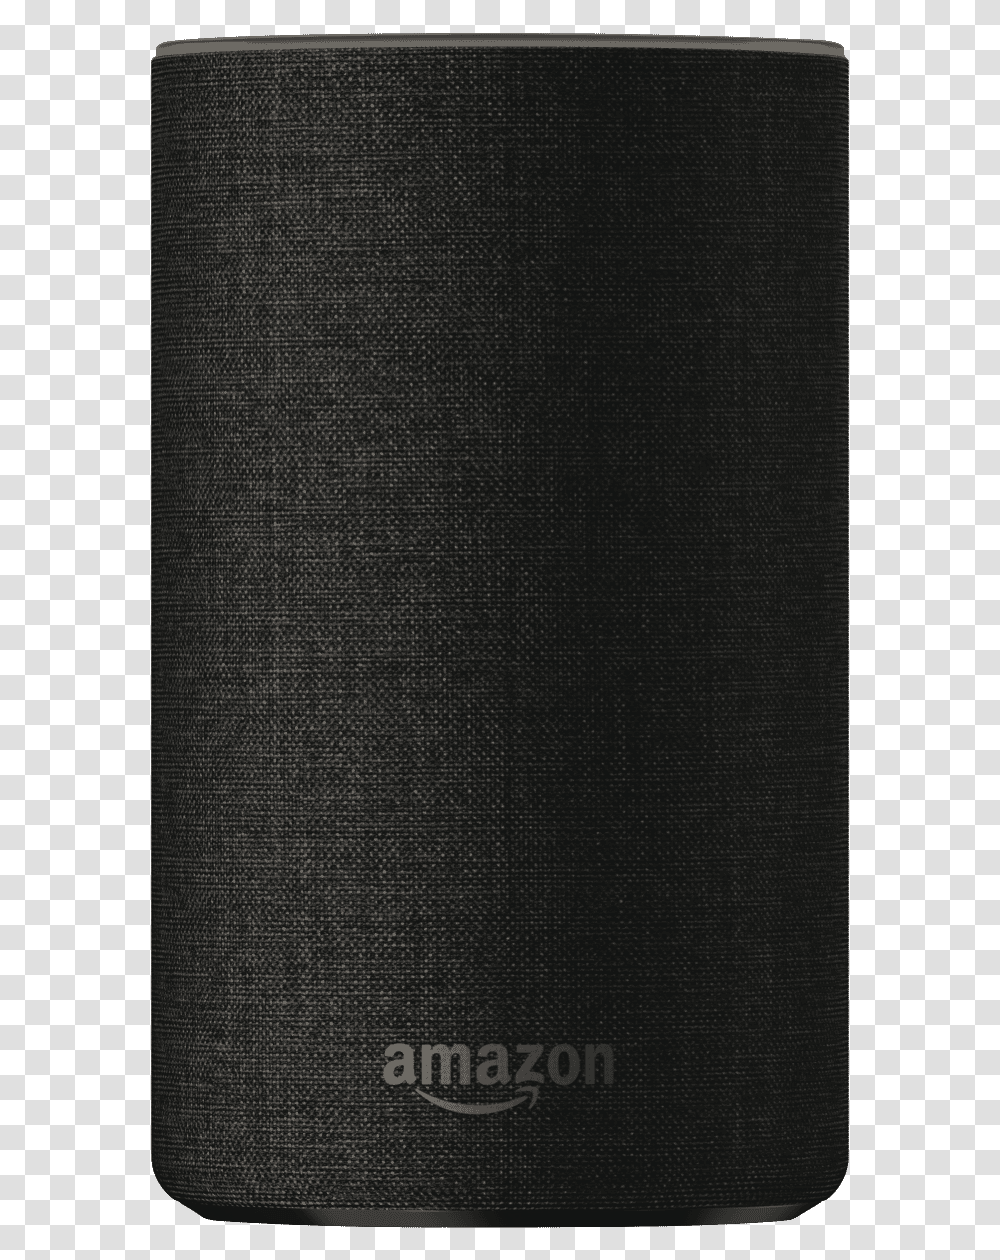 Amazon B0749wvs6h Echo 2nd Gen Charcoal Fabric, Rug, Home Decor, Pants Transparent Png